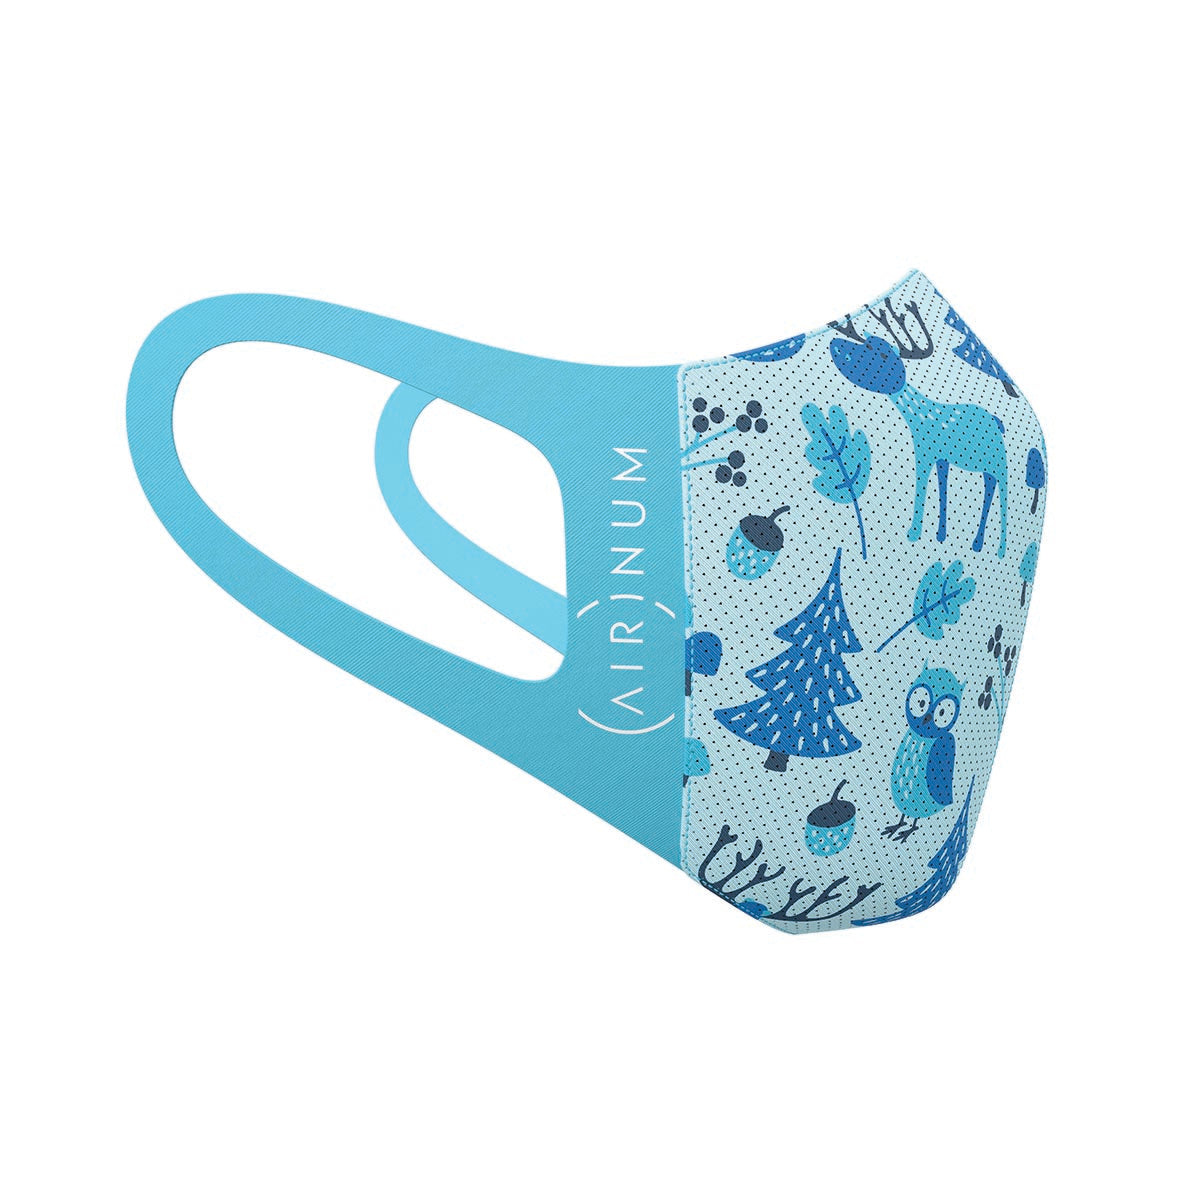 Airinum 空氣兒童口罩 Lite 樂園藍 (型號: S 小)